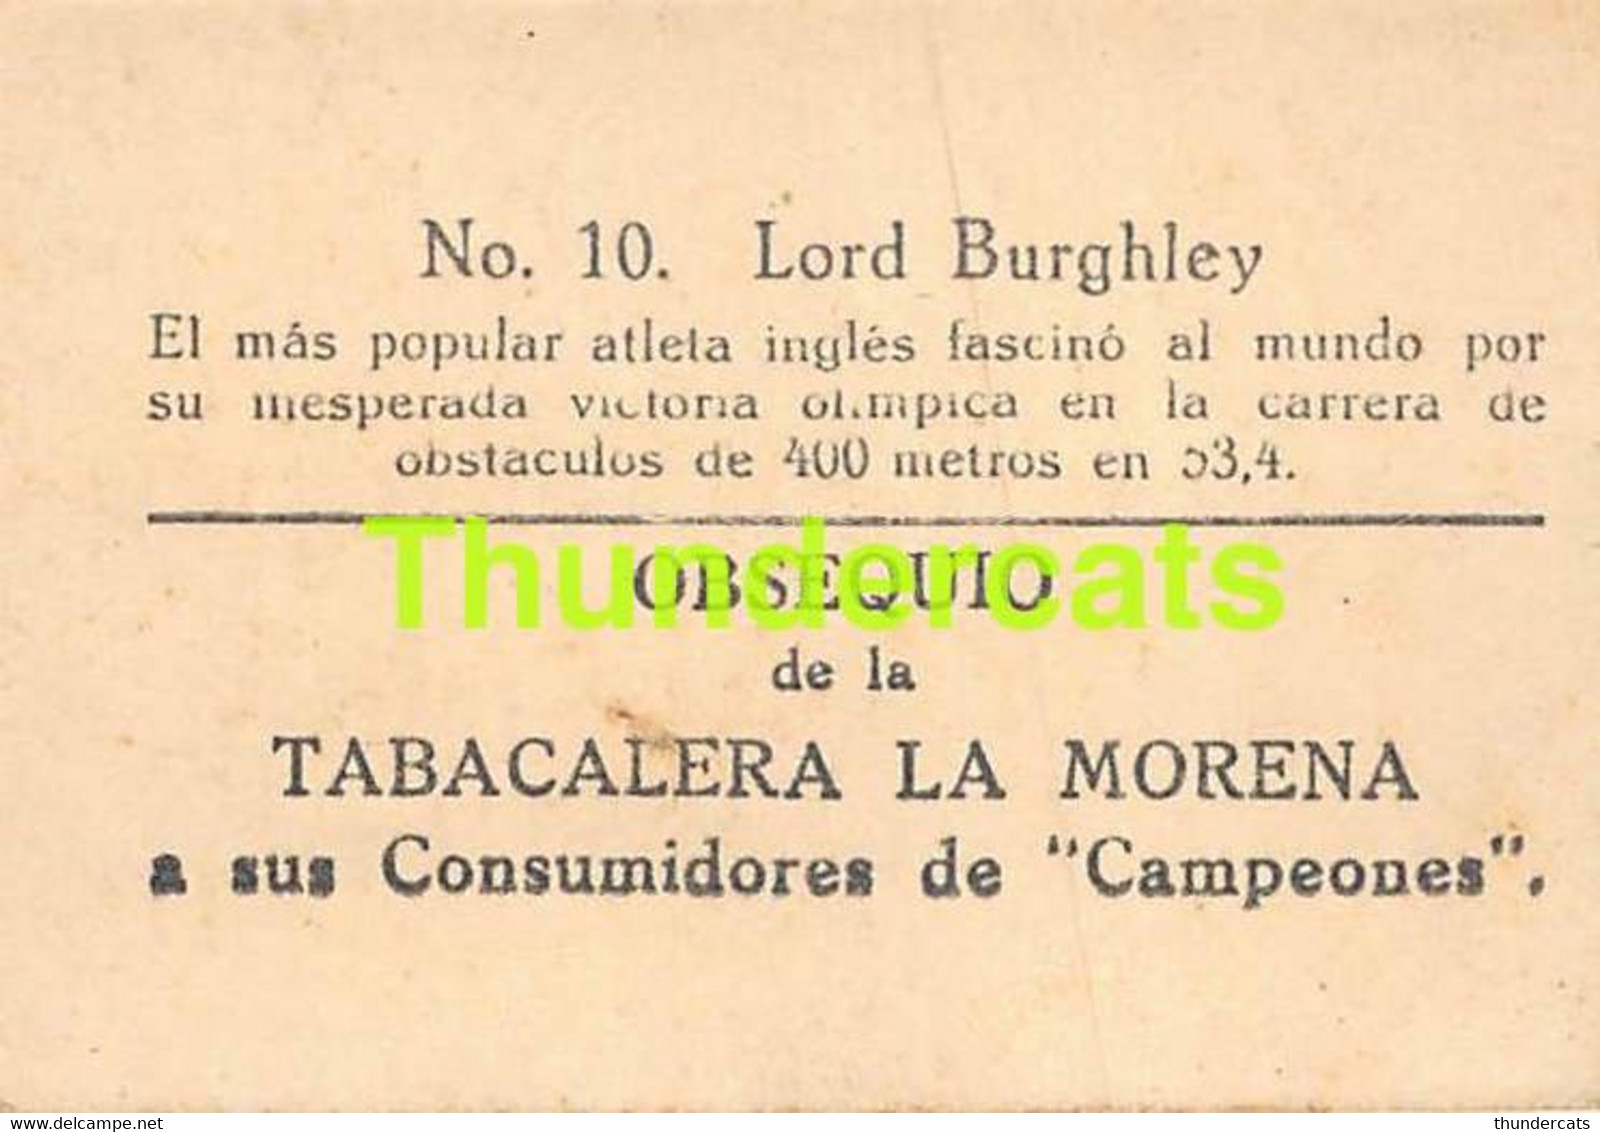 VINTAGE TRADING TOBACCO CARD CHROMO ATHLETICS 1928 TABACALERA LA MORENA No 10 LORD BURGHLEY - Athlétisme